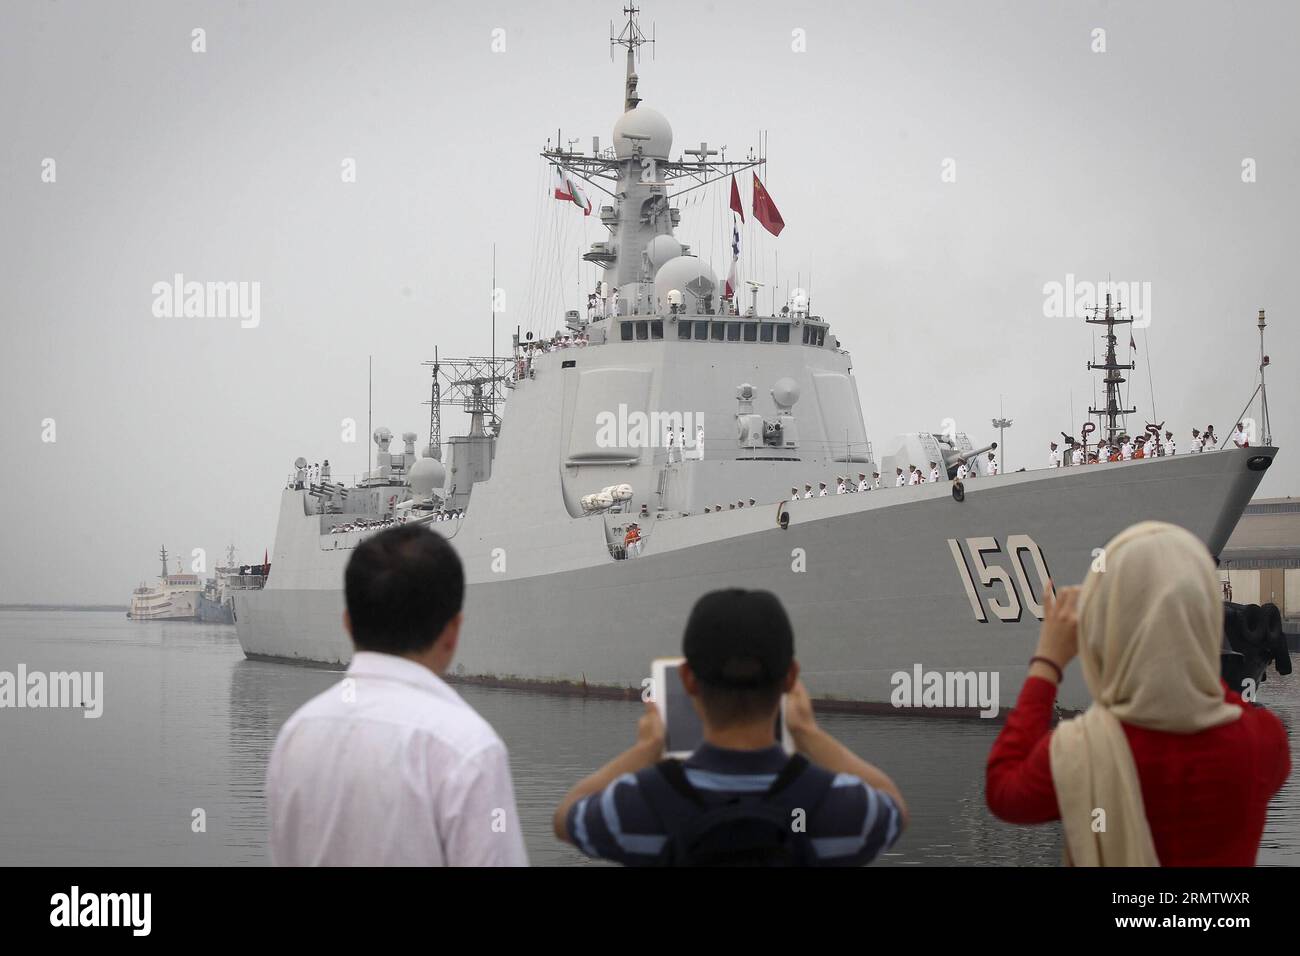 (140921) -- BANDAR ABBAS, -- La gente toma fotos del destructor Changchun de la 17ª flota naval de escolta china en el puerto sur de Bandar Abbas, Irán, el 20 de septiembre de 2014. La 17ª flota naval de escolta china atracó el sábado en el puerto de Bandar Abbas, en el sur de Irán, para una visita de cinco días. IRÁN-BANDAR ABBAS-FLOTA DE ESCOLTA CHINA-VISITA AhmadxHalabisaz PUBLICATIONxNOTxINxCHN Bandar Abbas Celebridades toman fotos del Destructor Changchun de la 17ª Flota Naval de escolta china en el puerto sur de Bandar Abbas Irán EL 20 2014 de septiembre La 17ª Flota Naval de escolta china atracó en EL sur de Irán S Bandar ABB Foto de stock